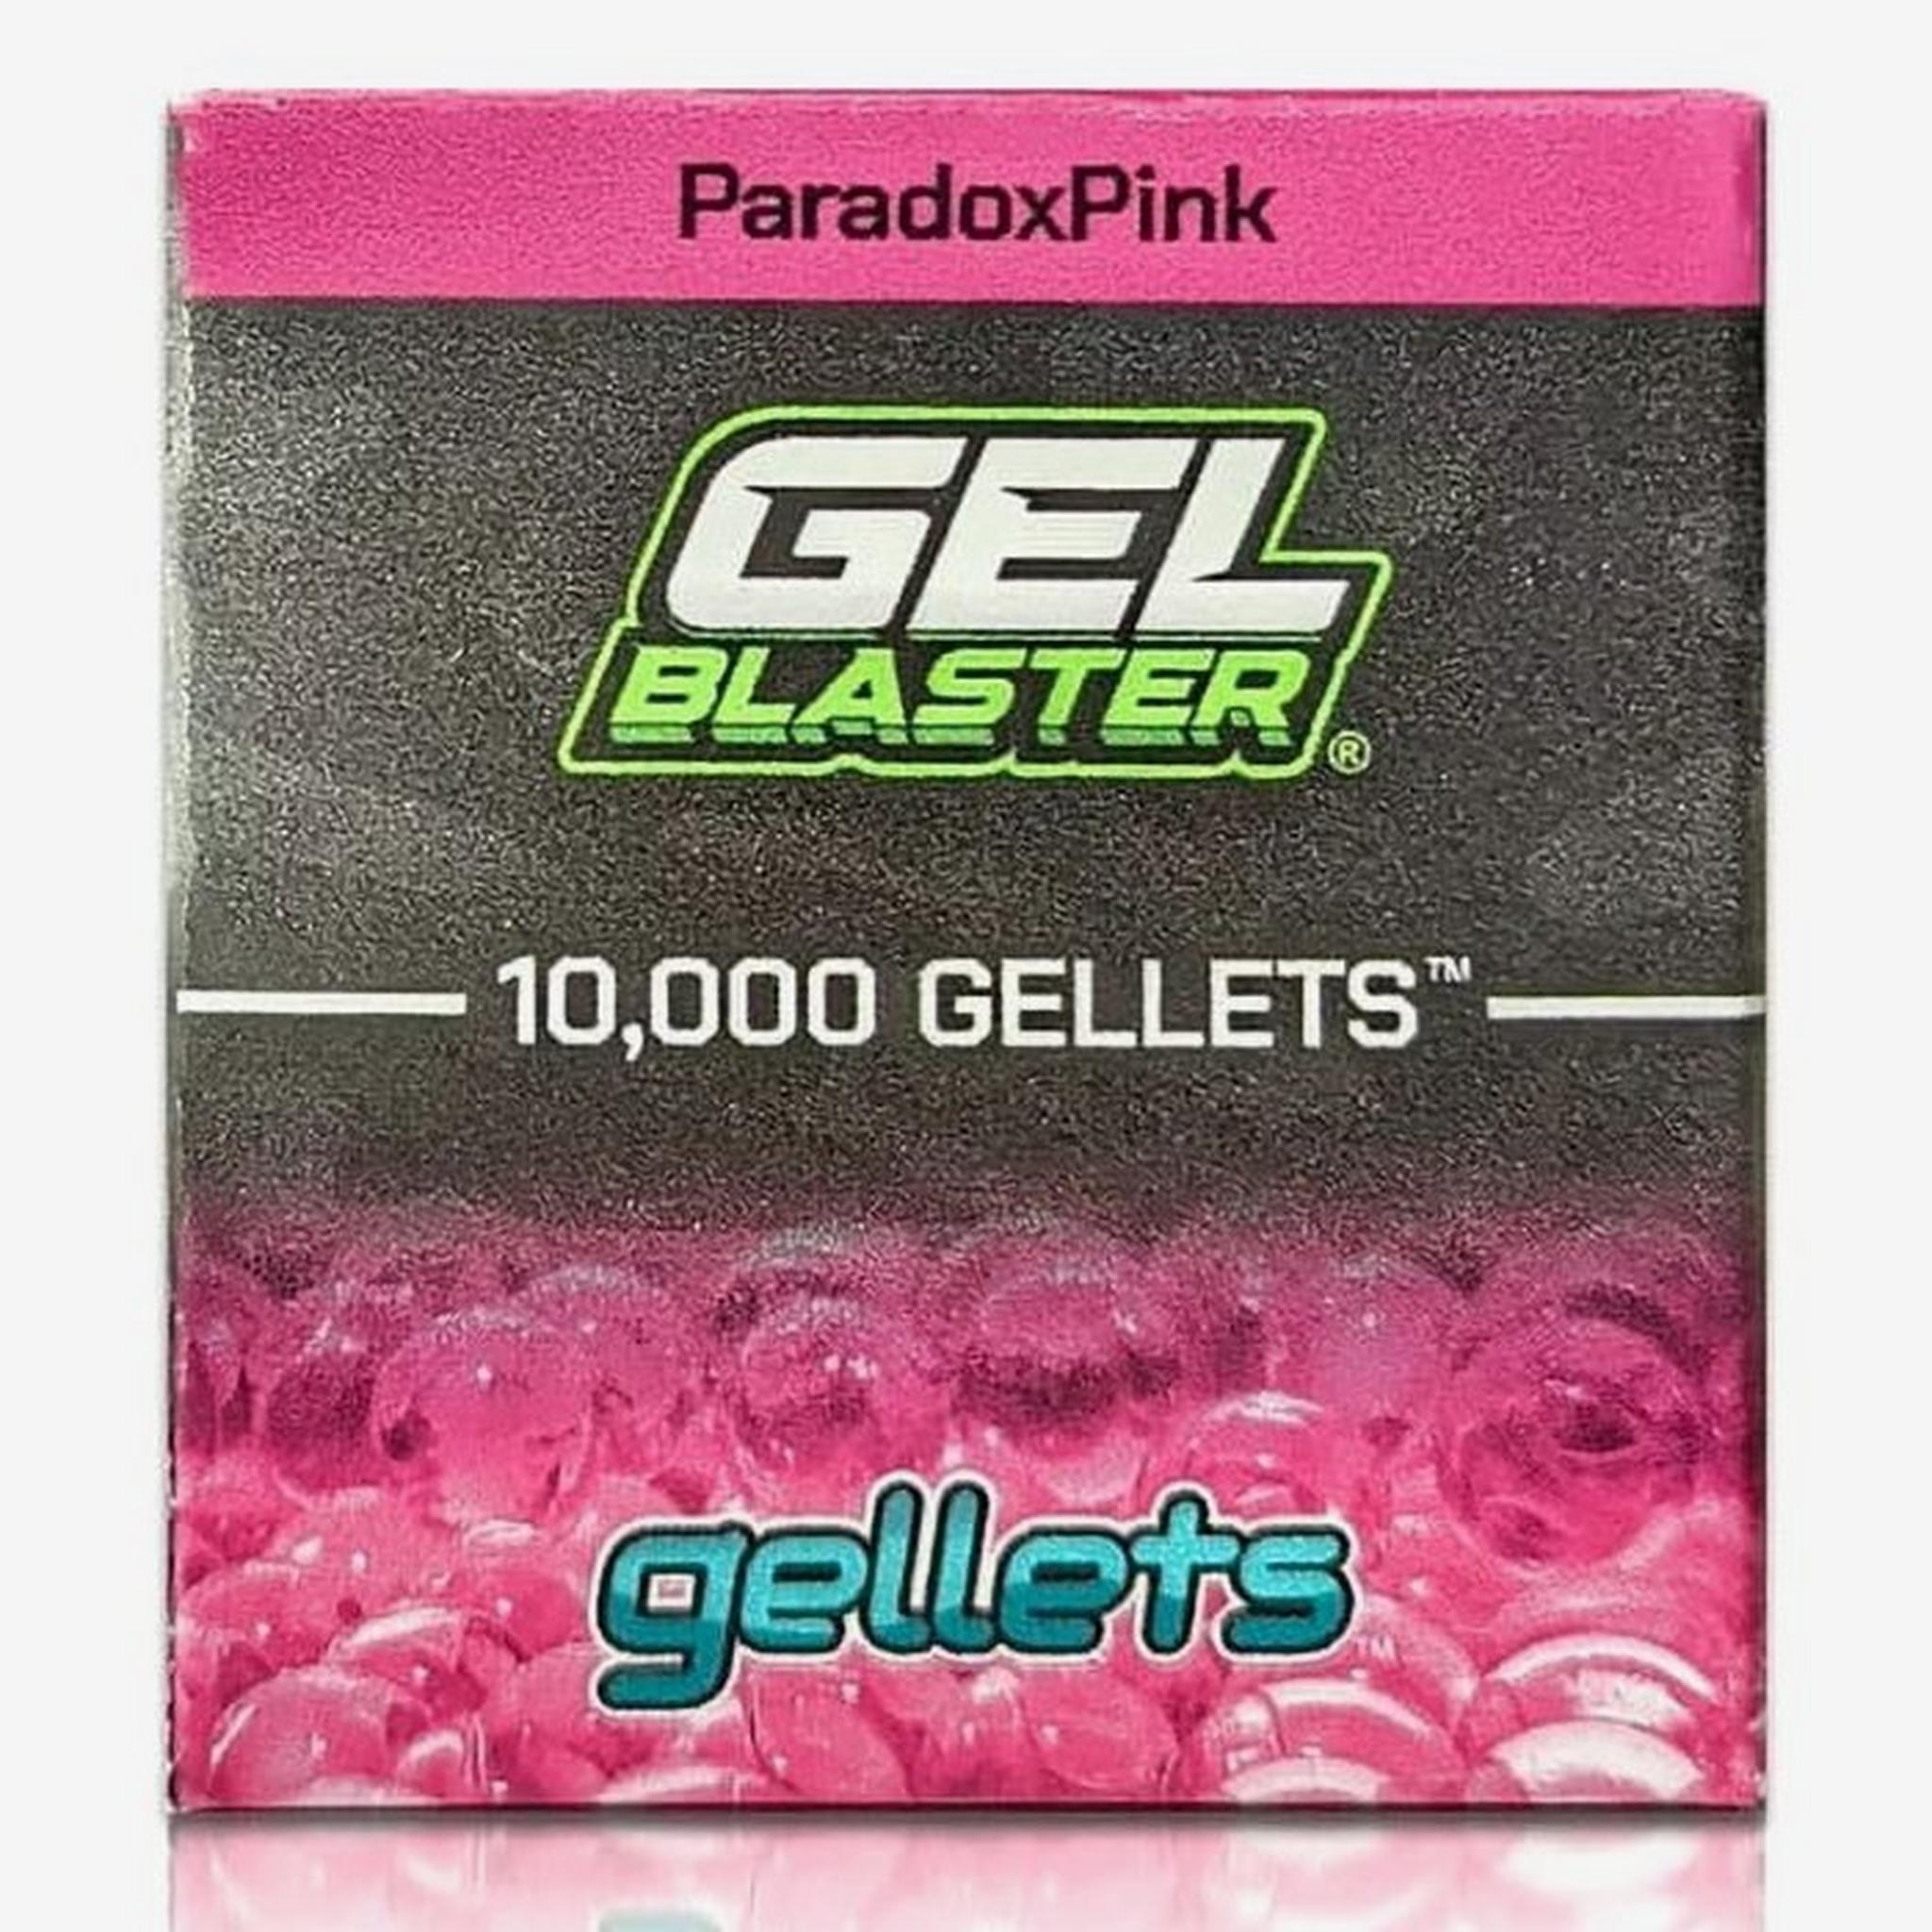 Gel Blaster Toro 10,000+ Gellets Blaster, GBGL1010-5L – Pink